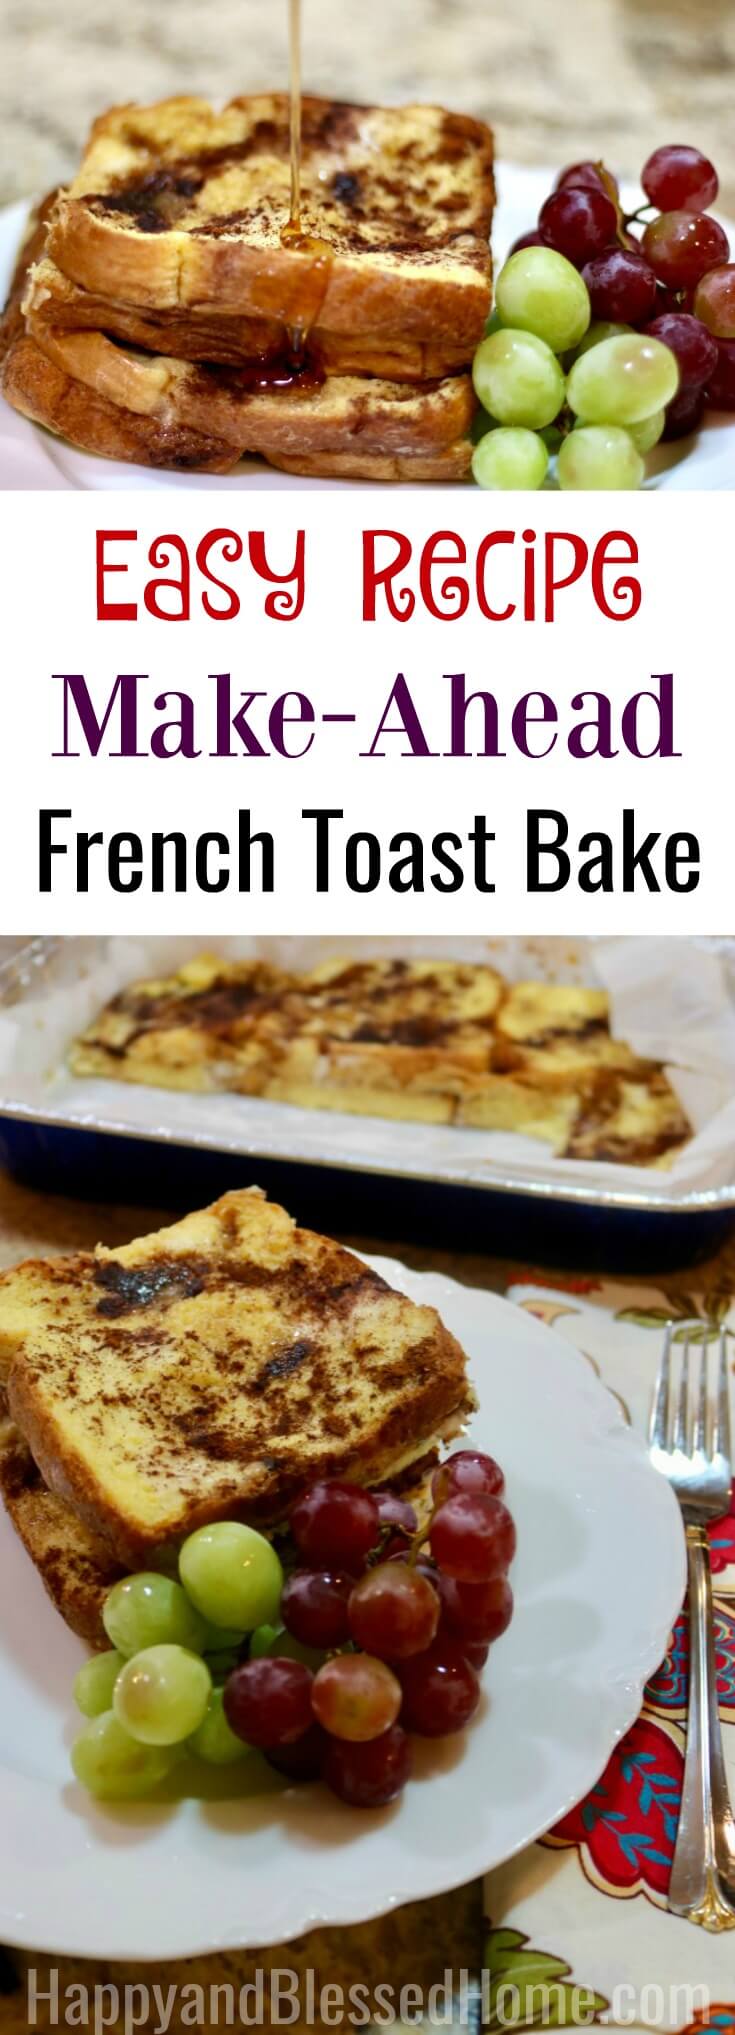 Easy Recipe Make-Ahead French Toast Bake